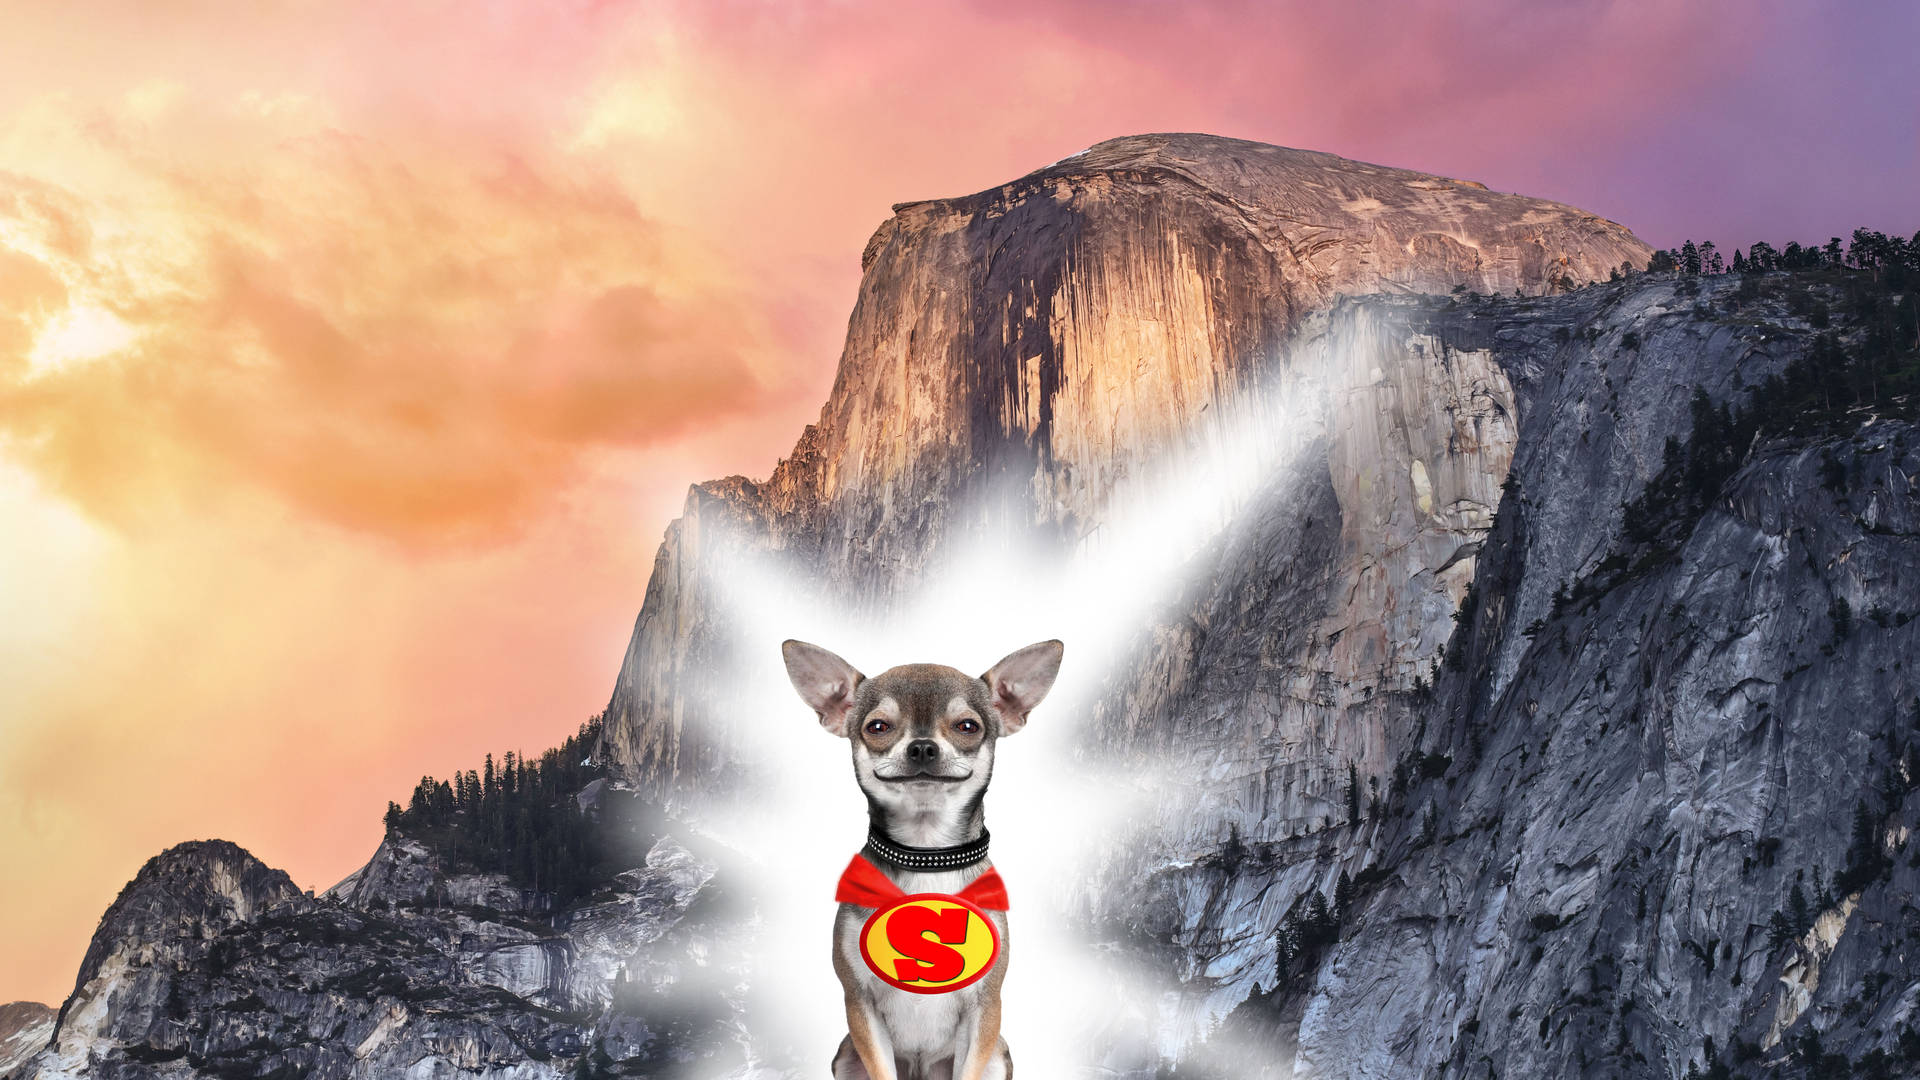 Chihuahua Superhero Poster Wallpaper